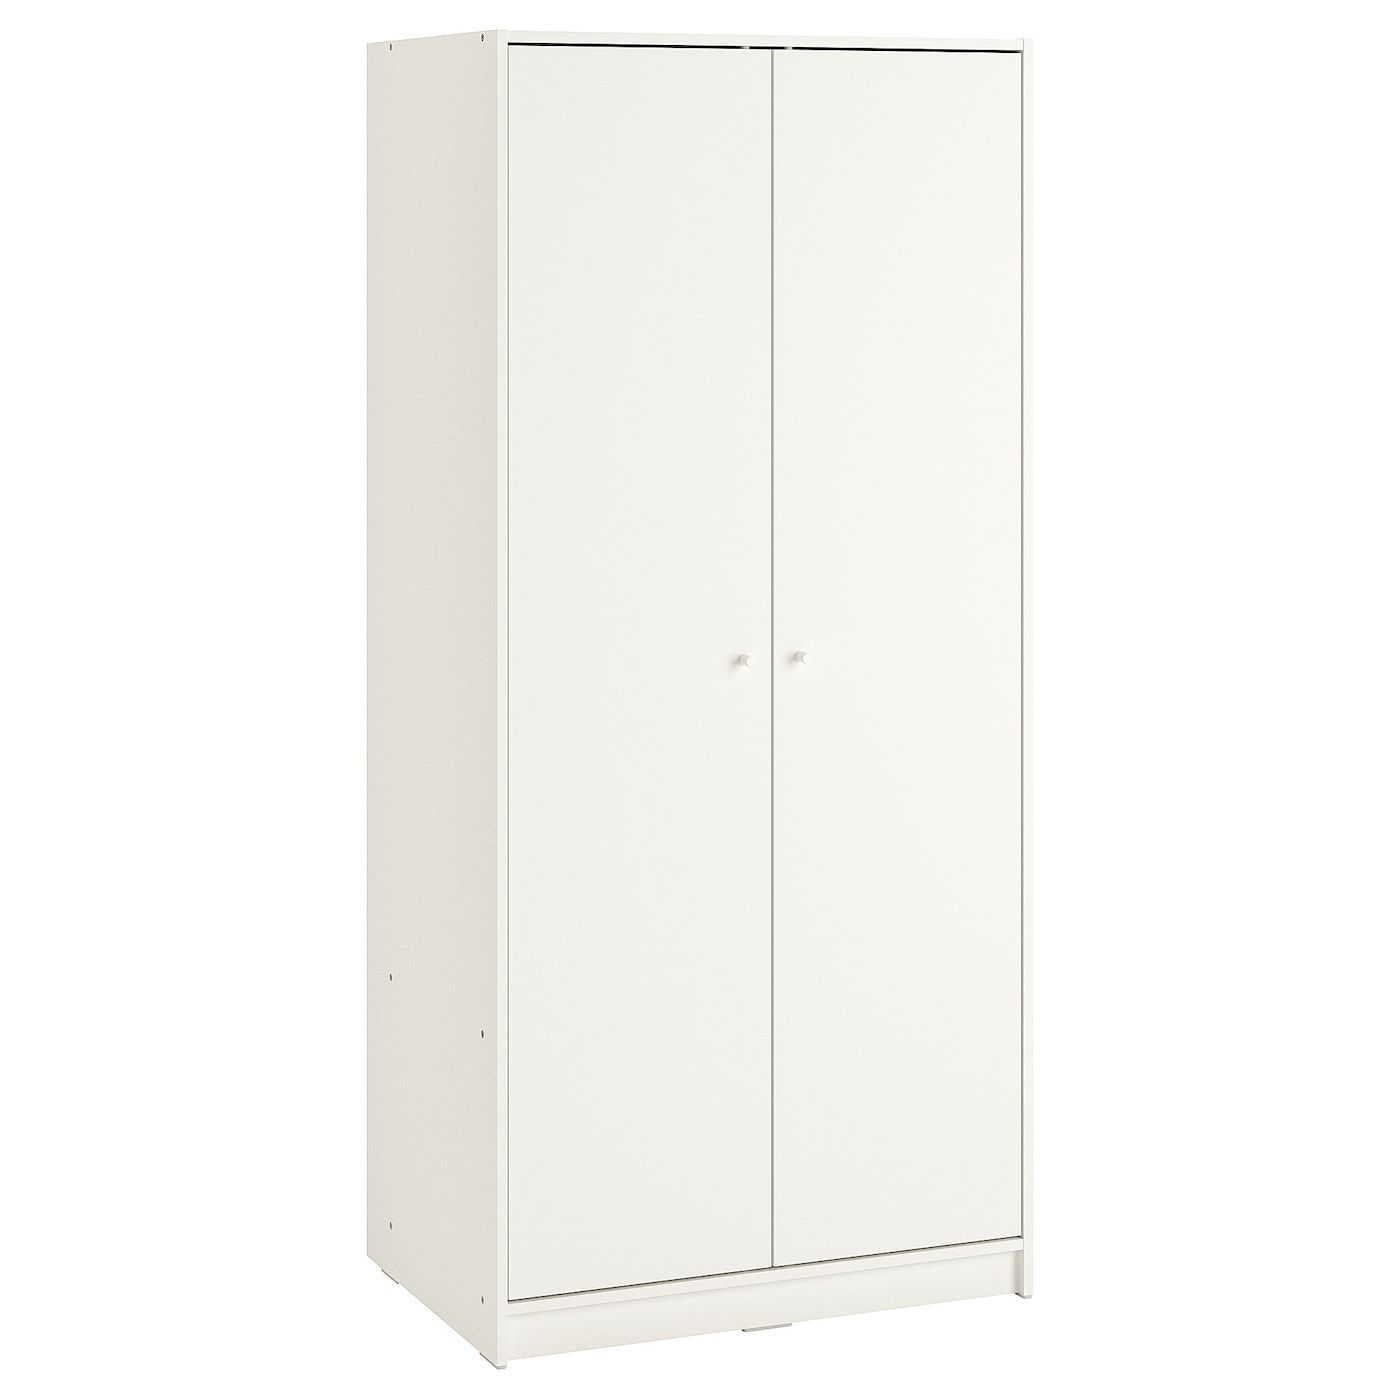 Kleppstad Wardrobe With 2 Doors, White, 311/4x691/4" – Ikea Throughout Cheap 2 Door Wardrobes (View 6 of 20)